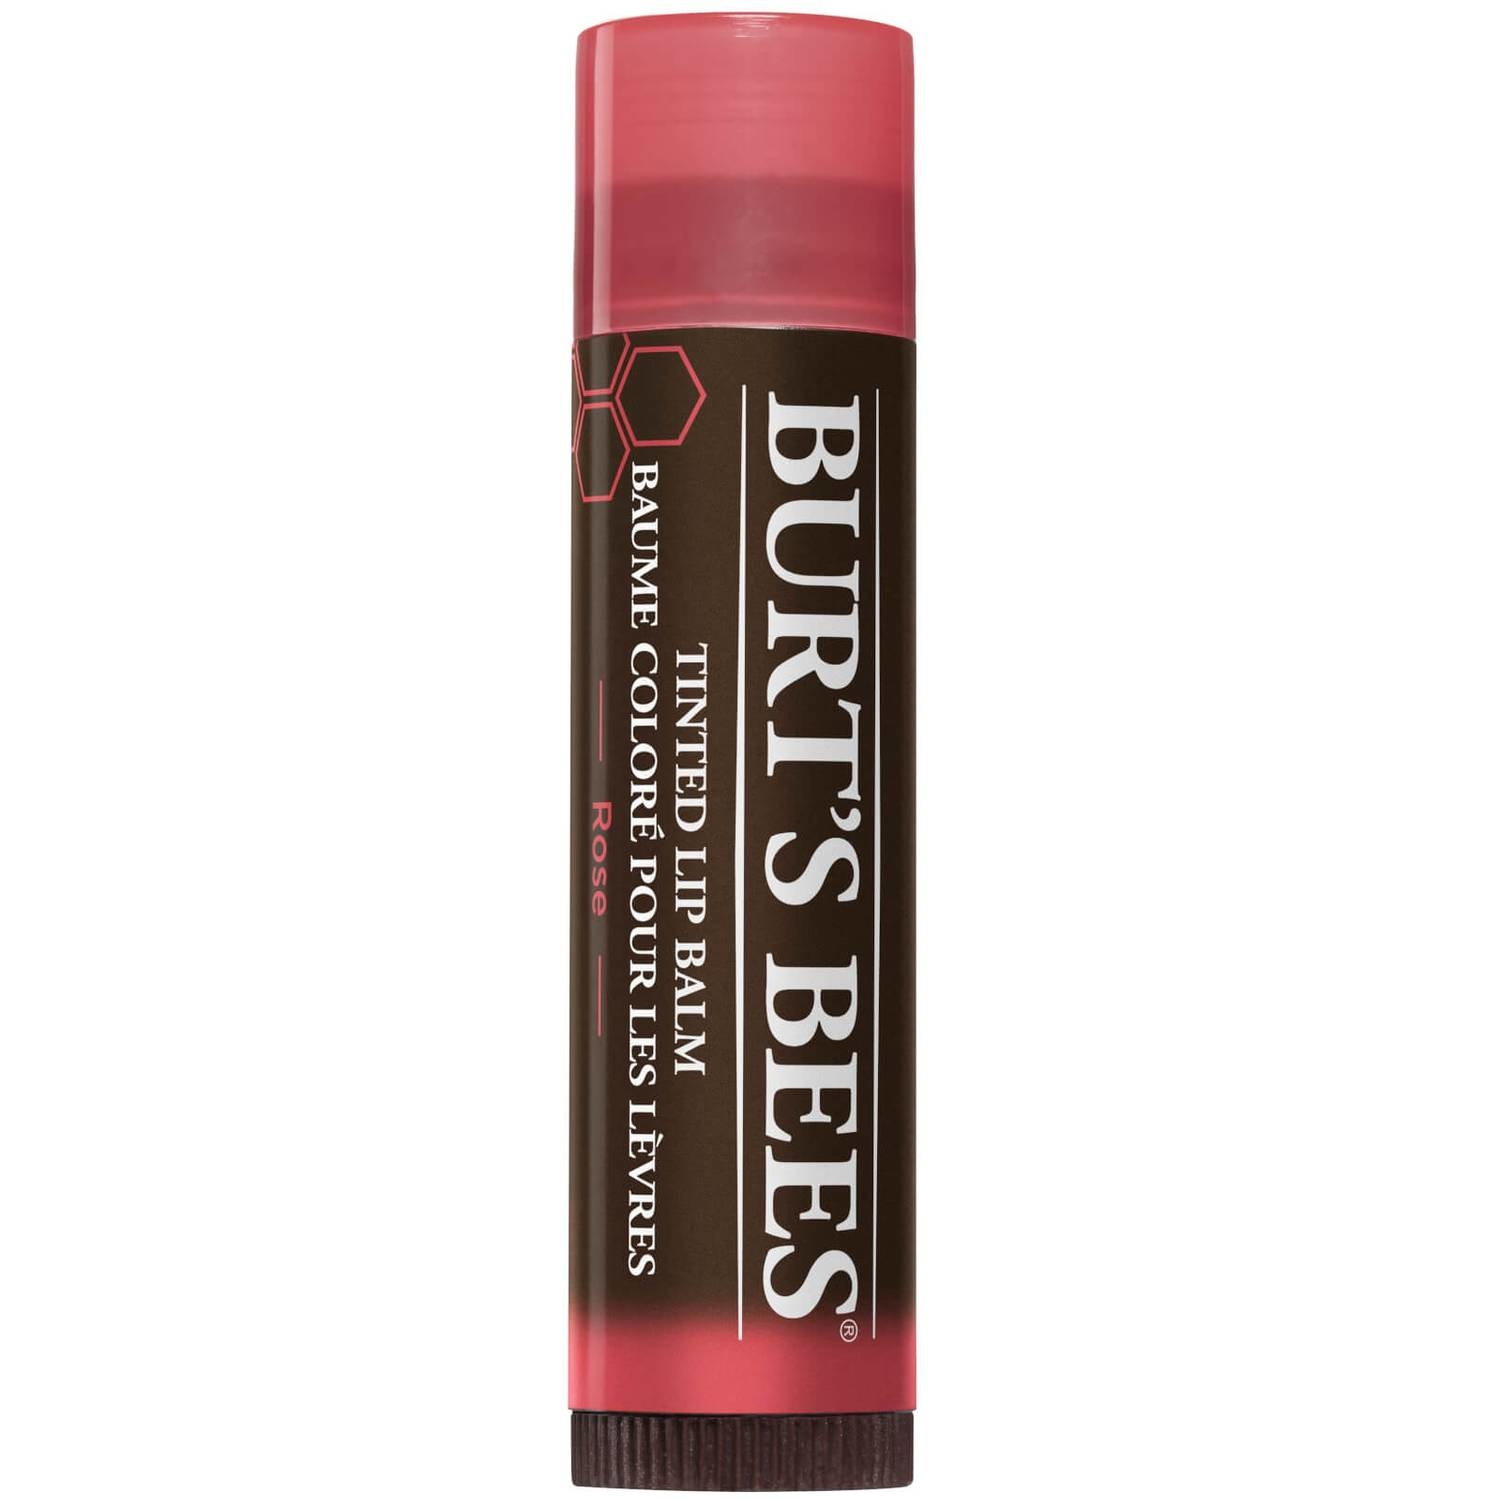 Burt's Bees Tinted Balm - Rose - Make-Up Musthaves